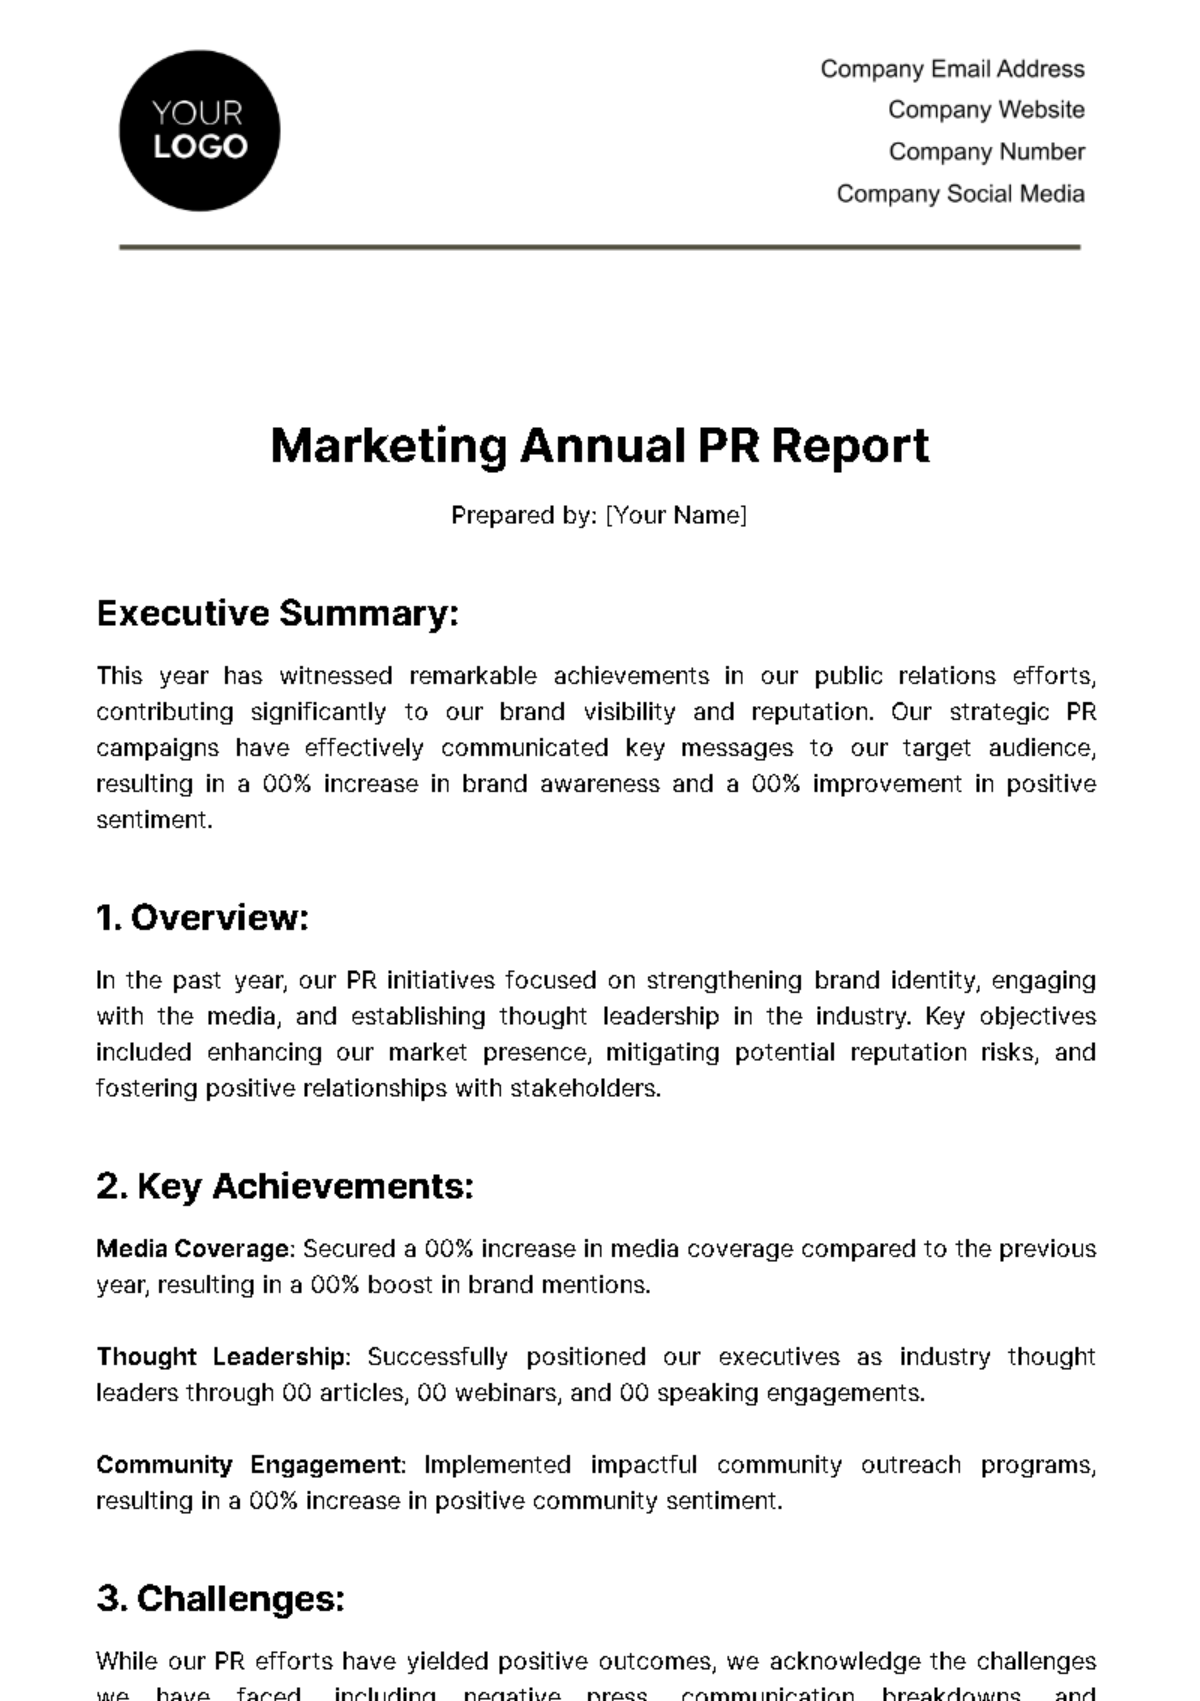 Free Marketing Annual PR Report Template